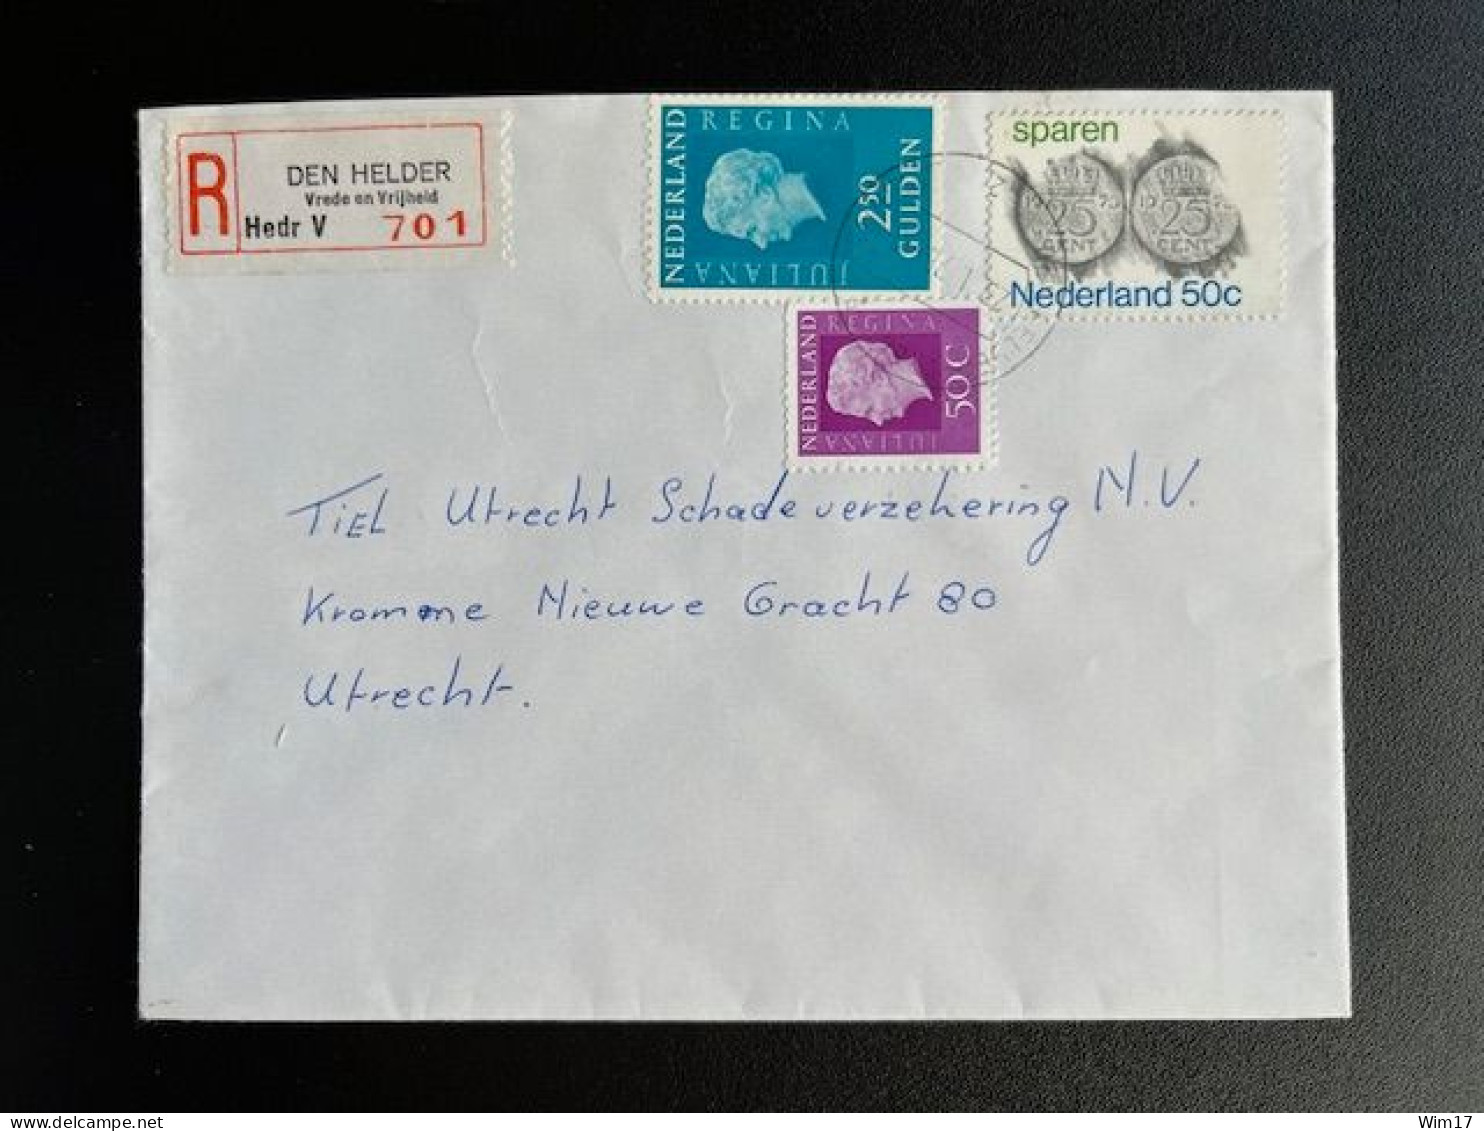 NETHERLANDS 1976 REGISTERED LETTER DEN HELDER VREDE EN VRIJHEIDPLEIN TO UTRECHT 23-01-1976 NEDERLAND AANGETEKEND - Lettres & Documents